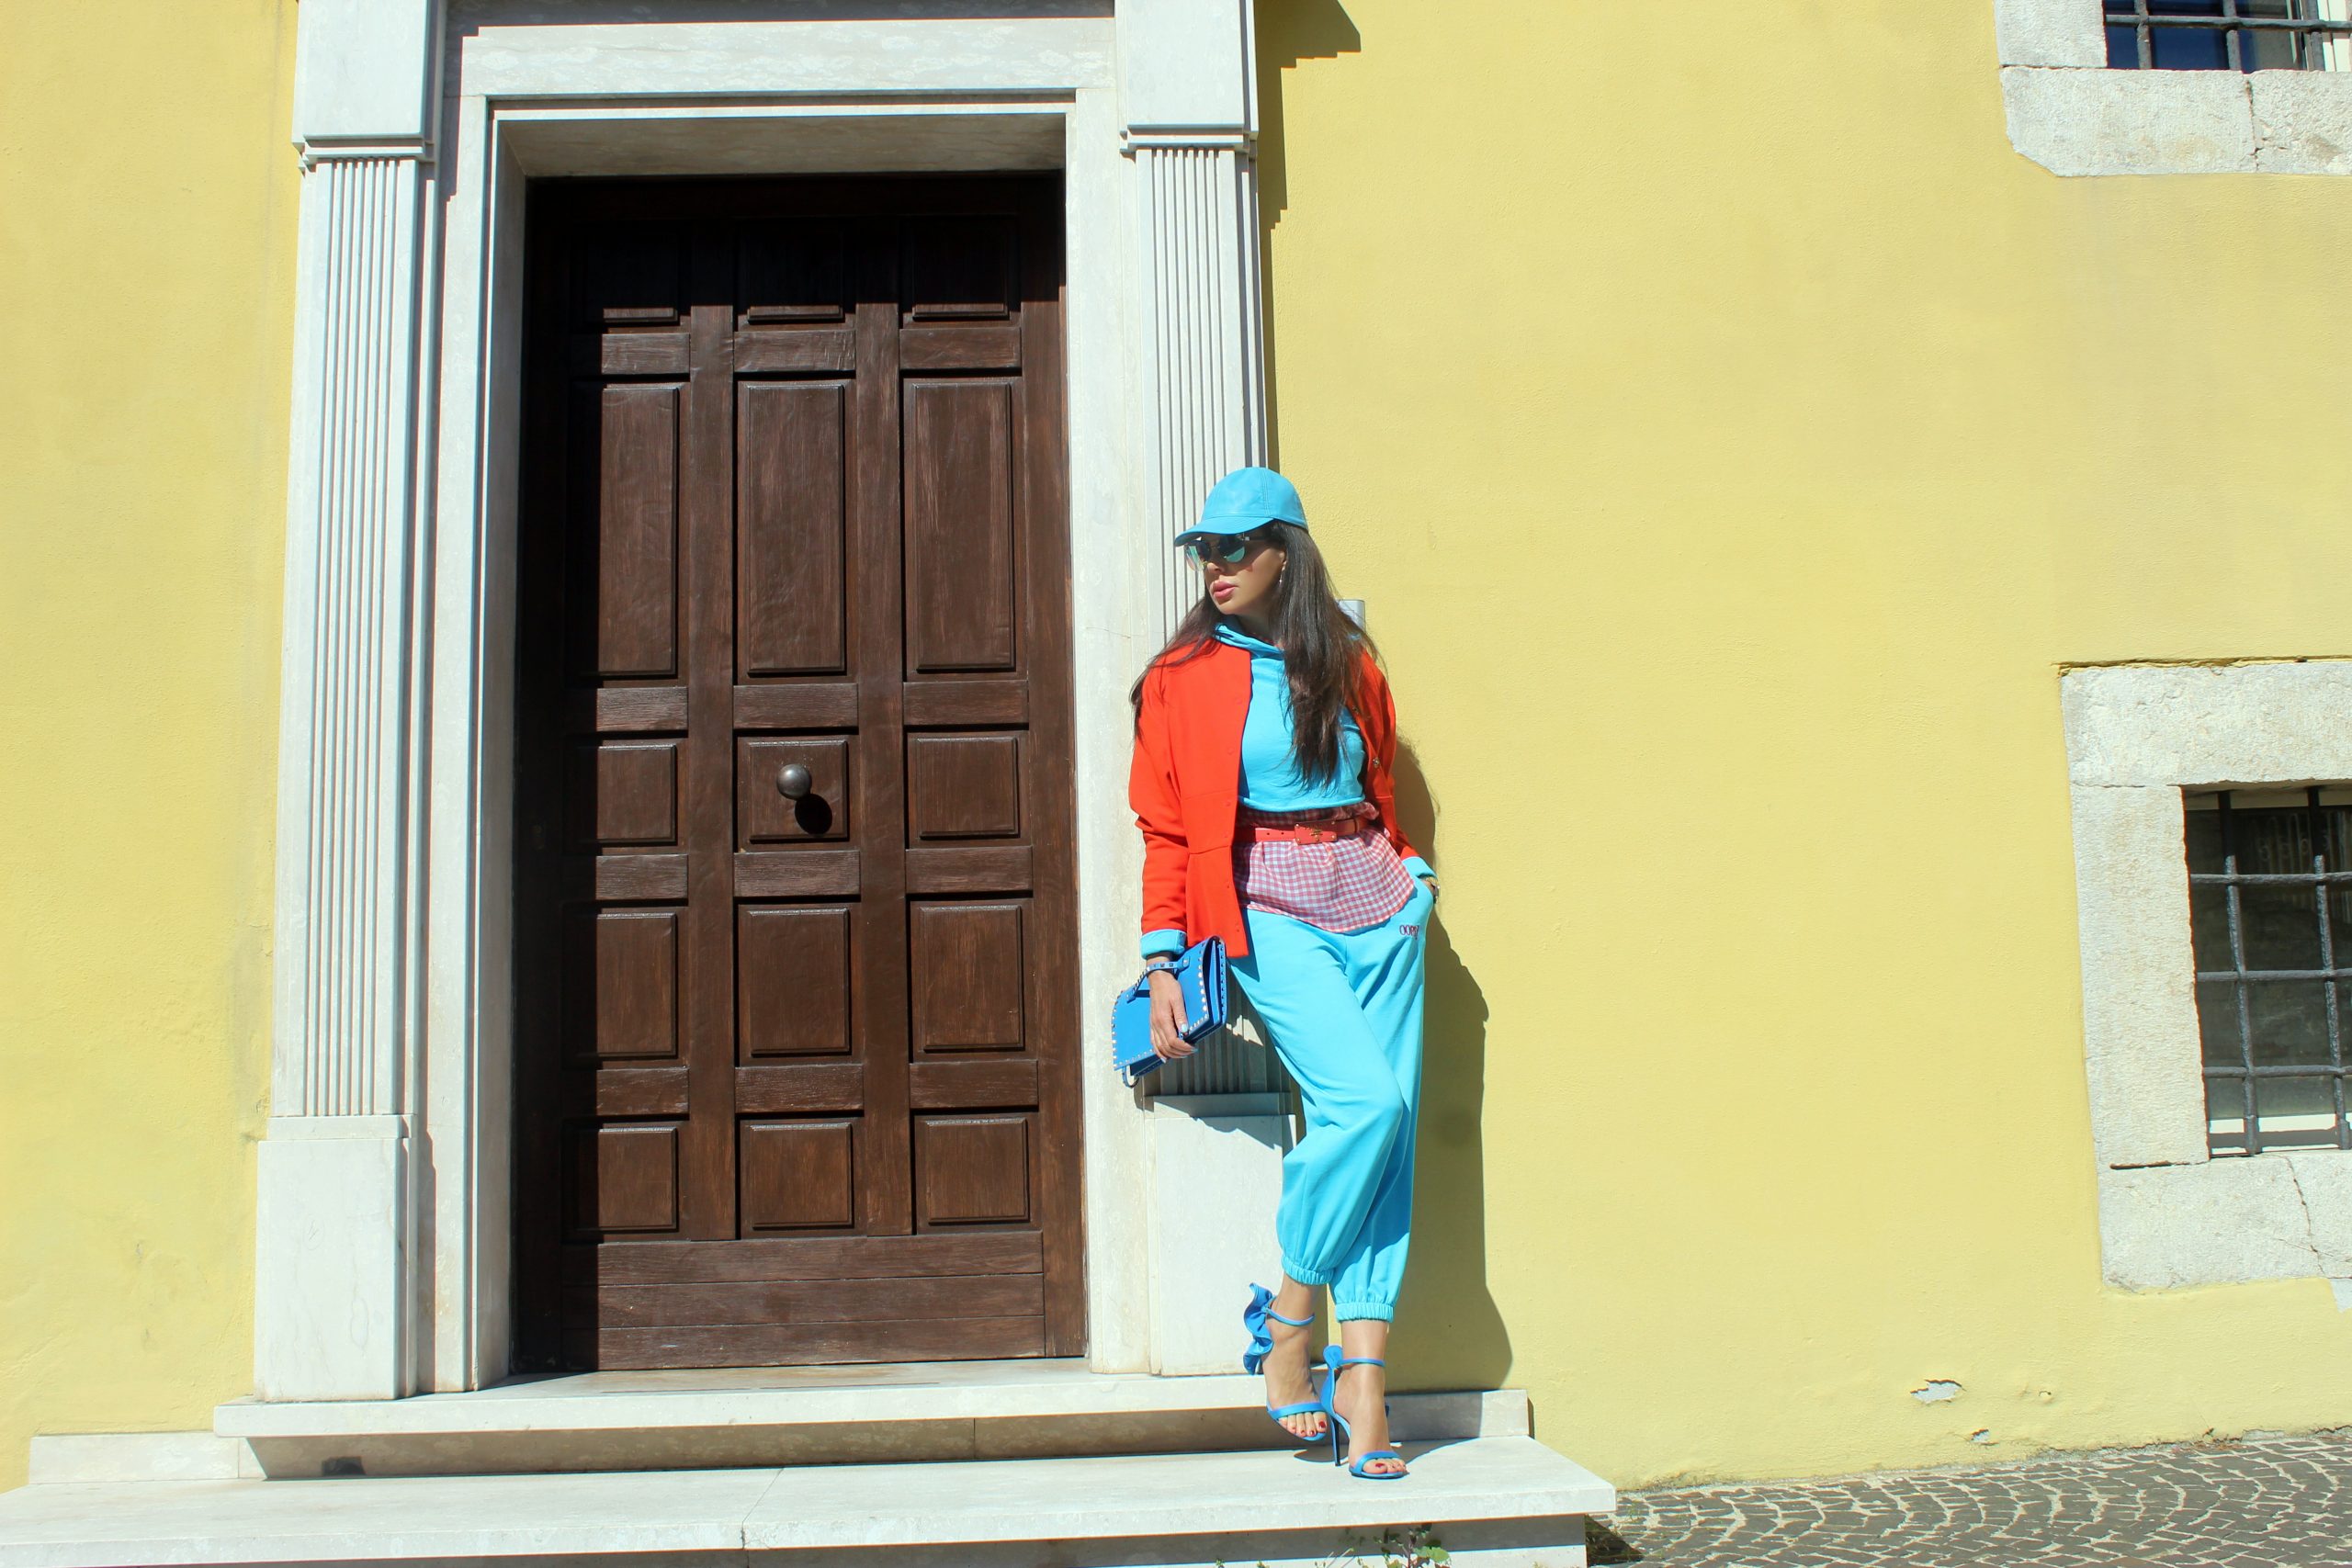 Prada Vivid Colour Outfit Turquoise and Orange Spring Trend 2021